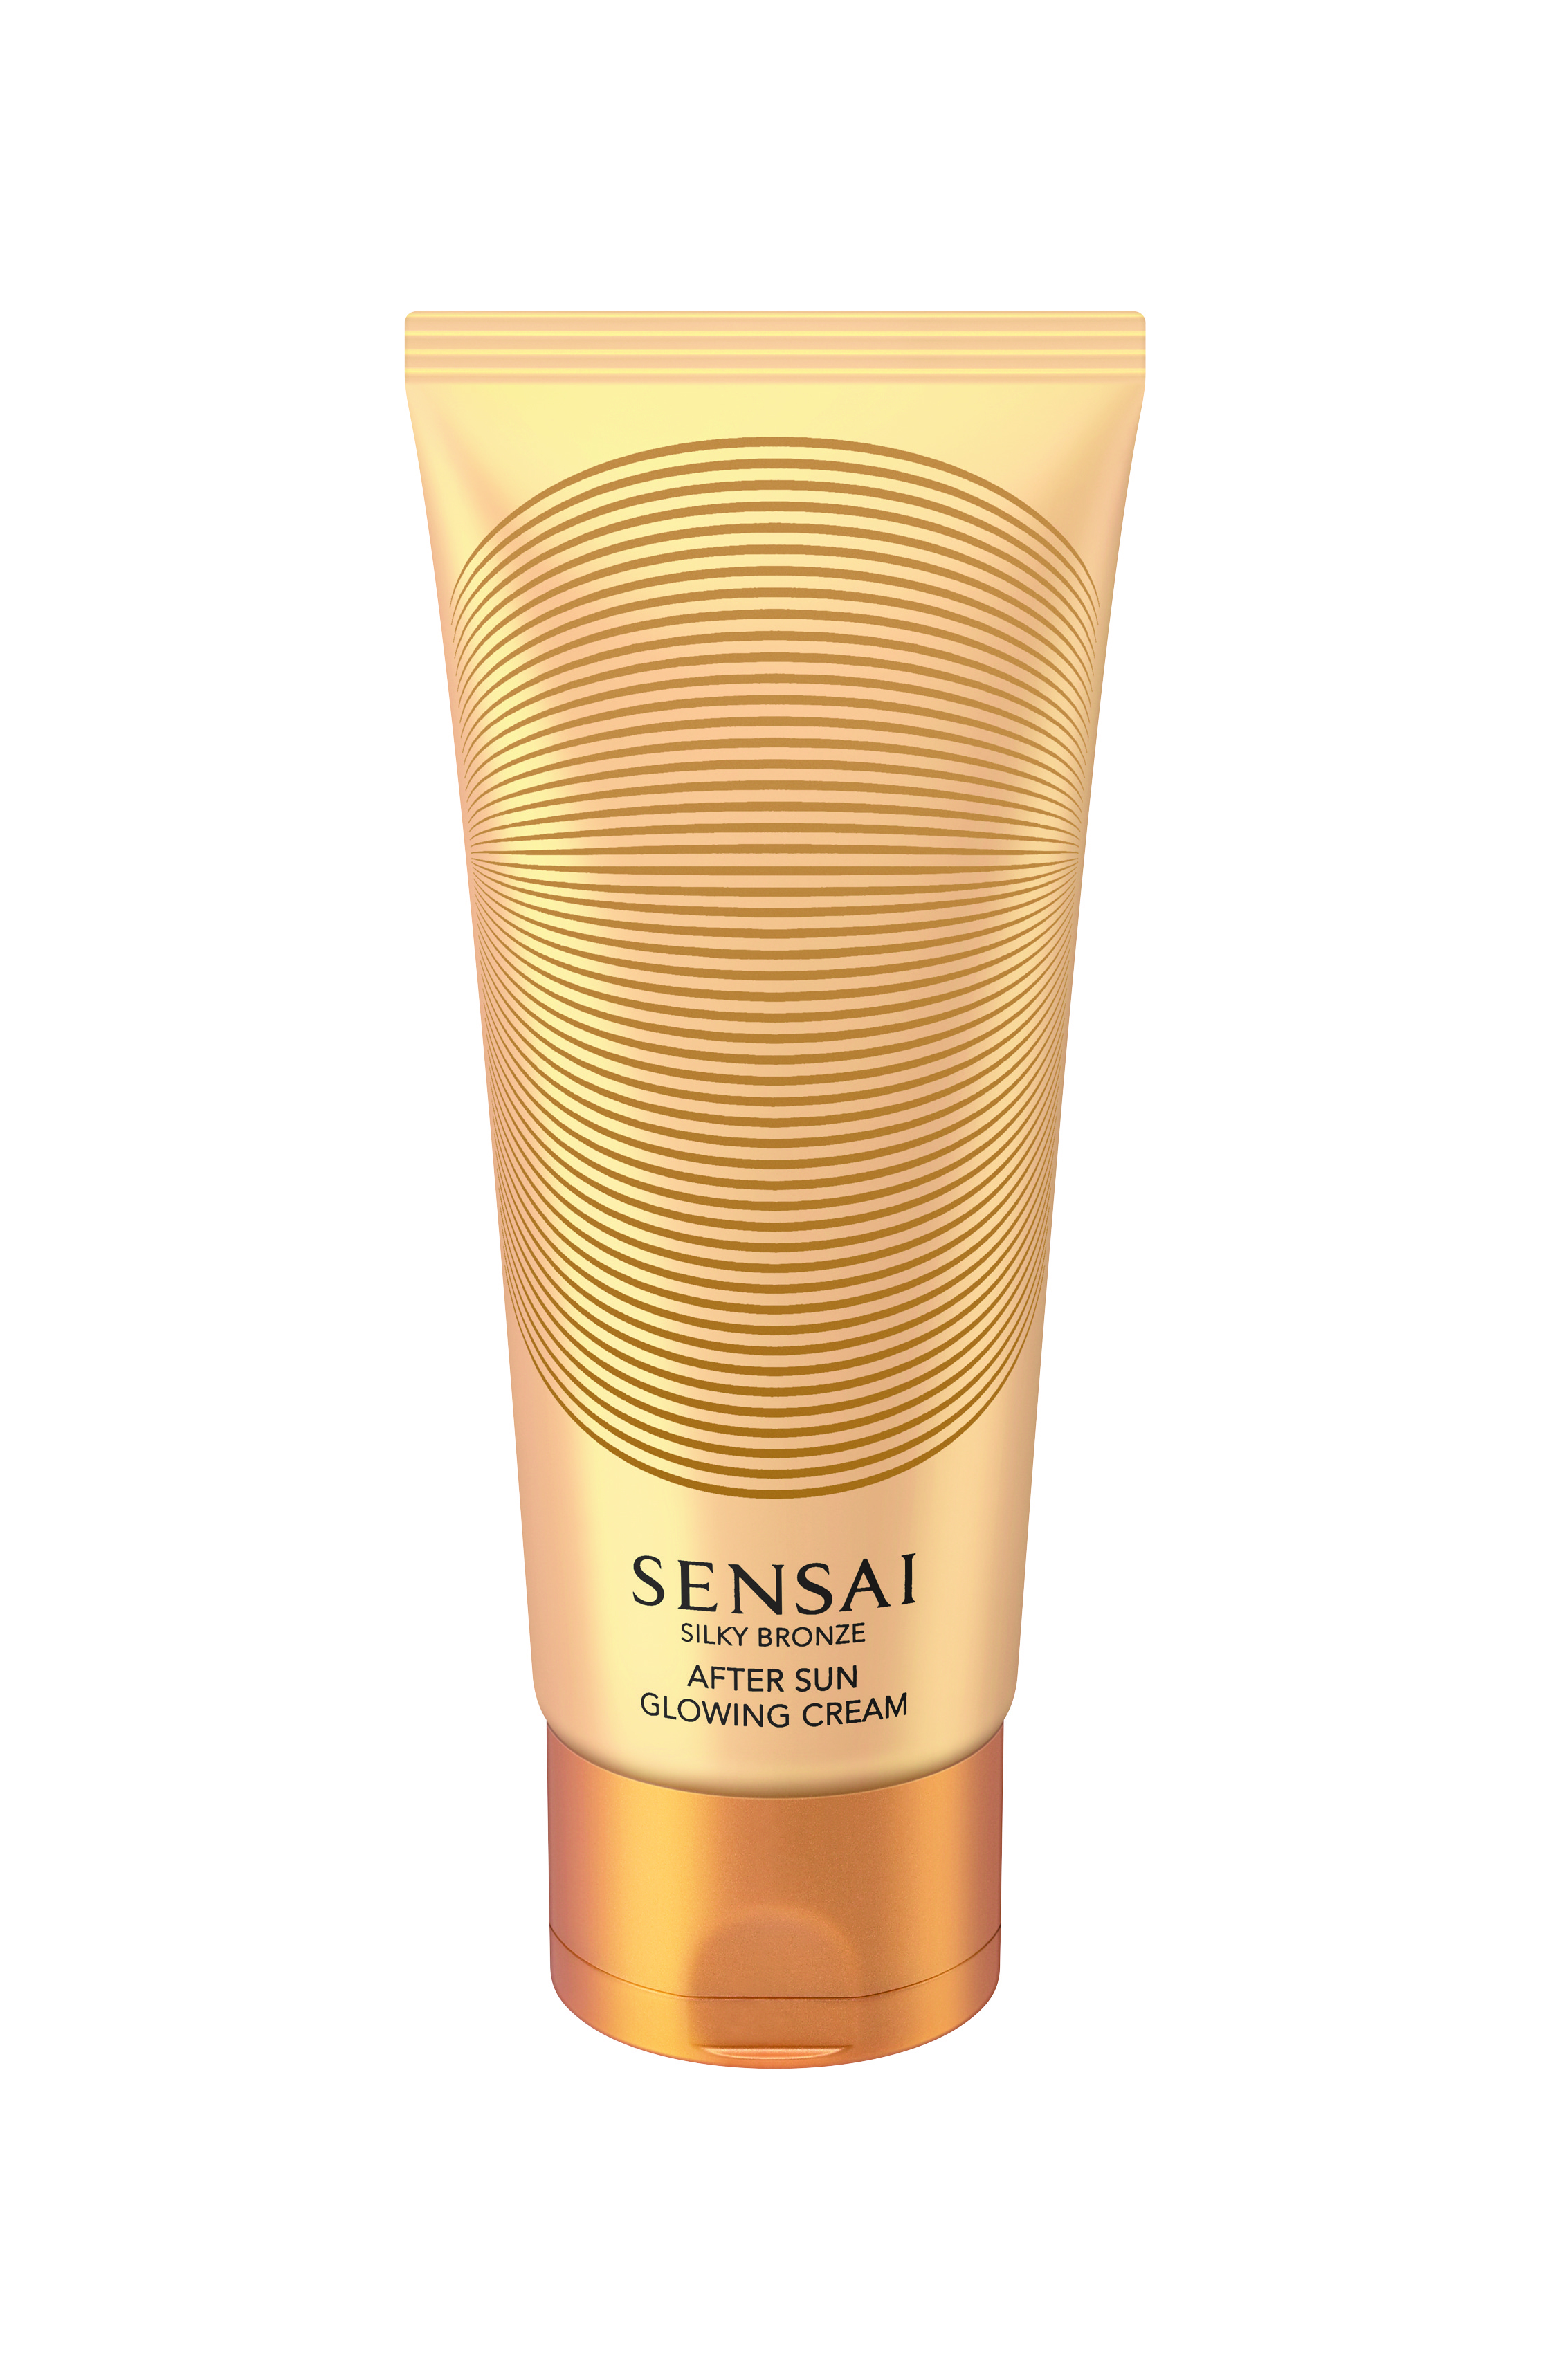 SENSAI Silky Bronze After Sun Glowing Cream